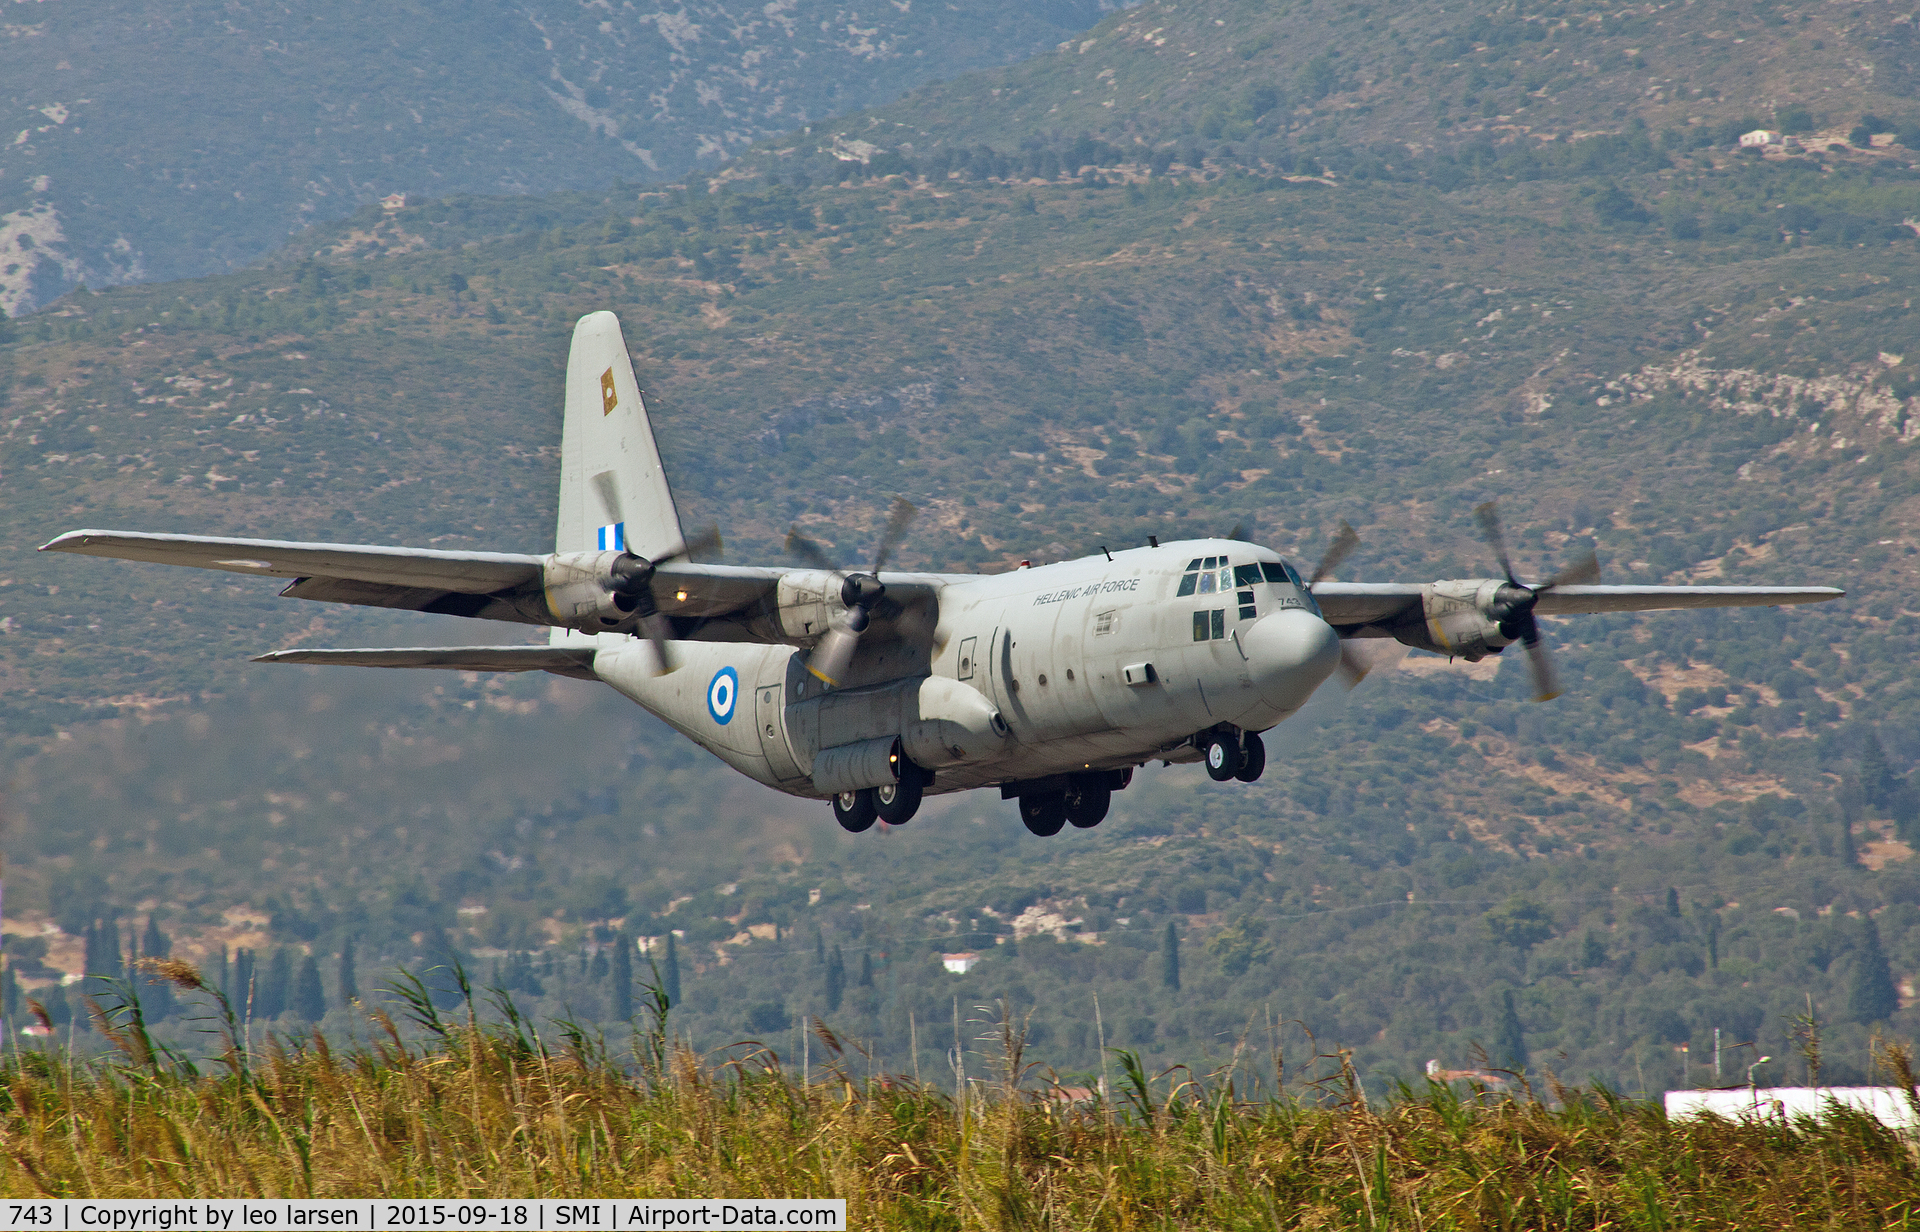 743, Lockheed C-130H Hercules C/N 382-4665, Samos Greece 18.9.15